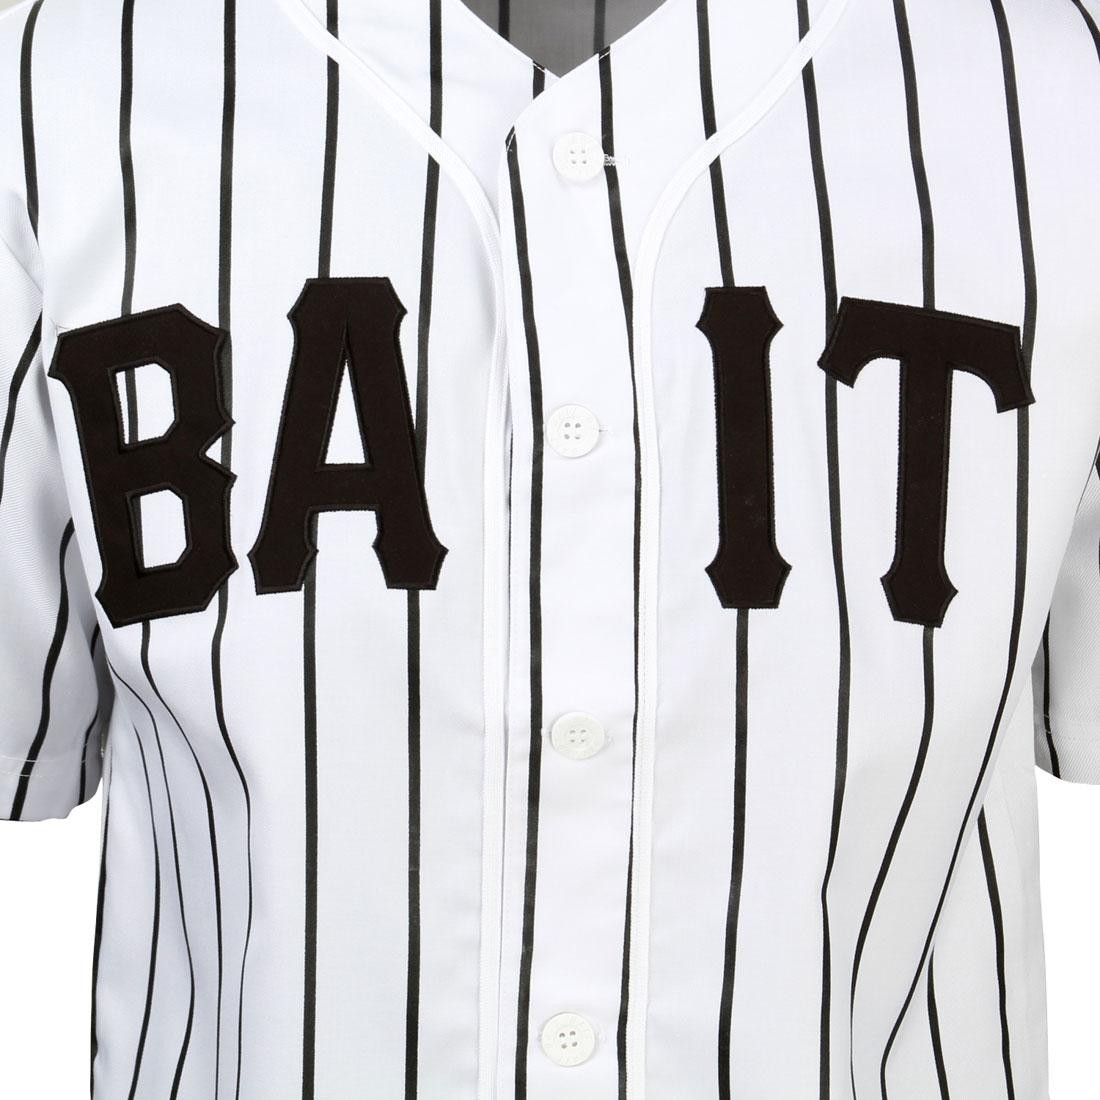 Bait Men Sluggers Baseball Jersey (Black / Gray) M